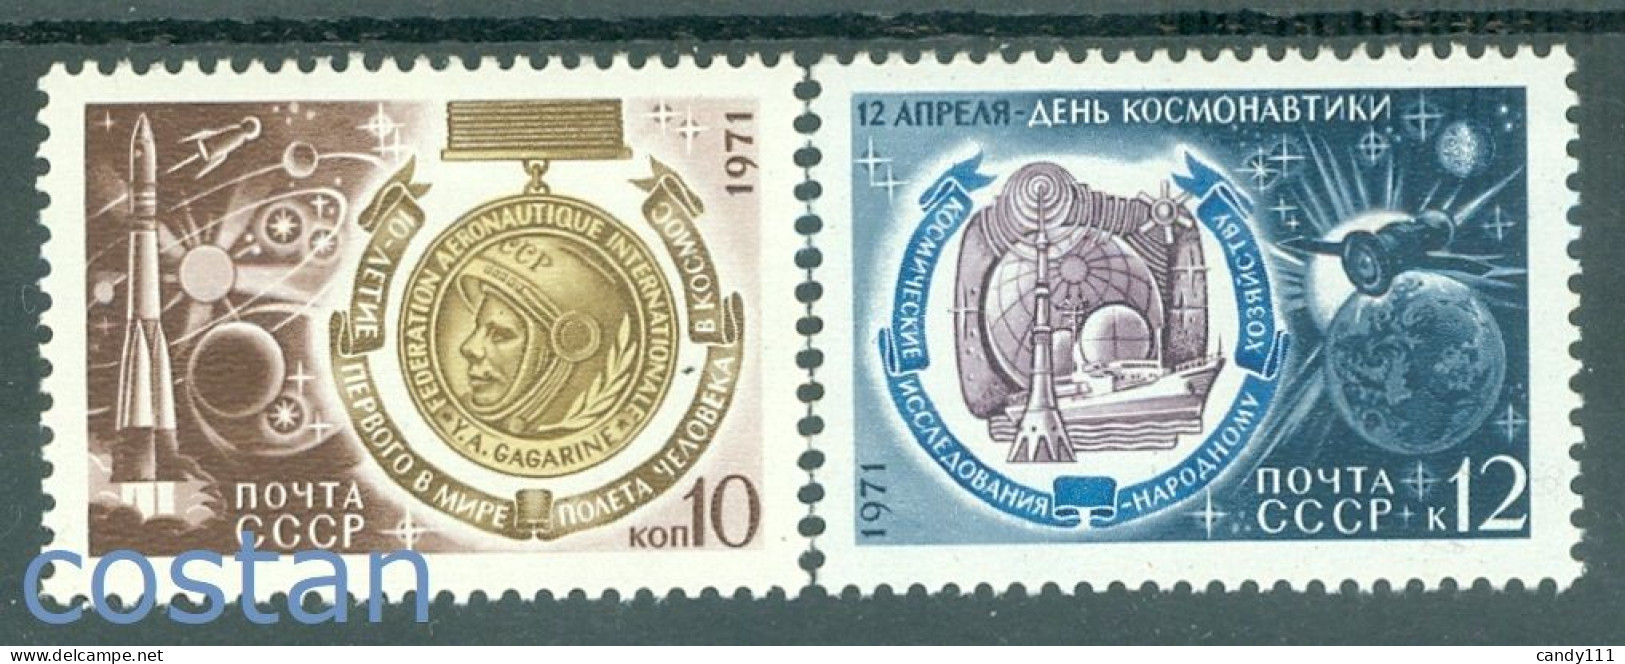 1971 Cosmonautics Day,Space,Gagarin Medal,Satellite,ship,rocket,Russia,3867,MNH - Nuovi